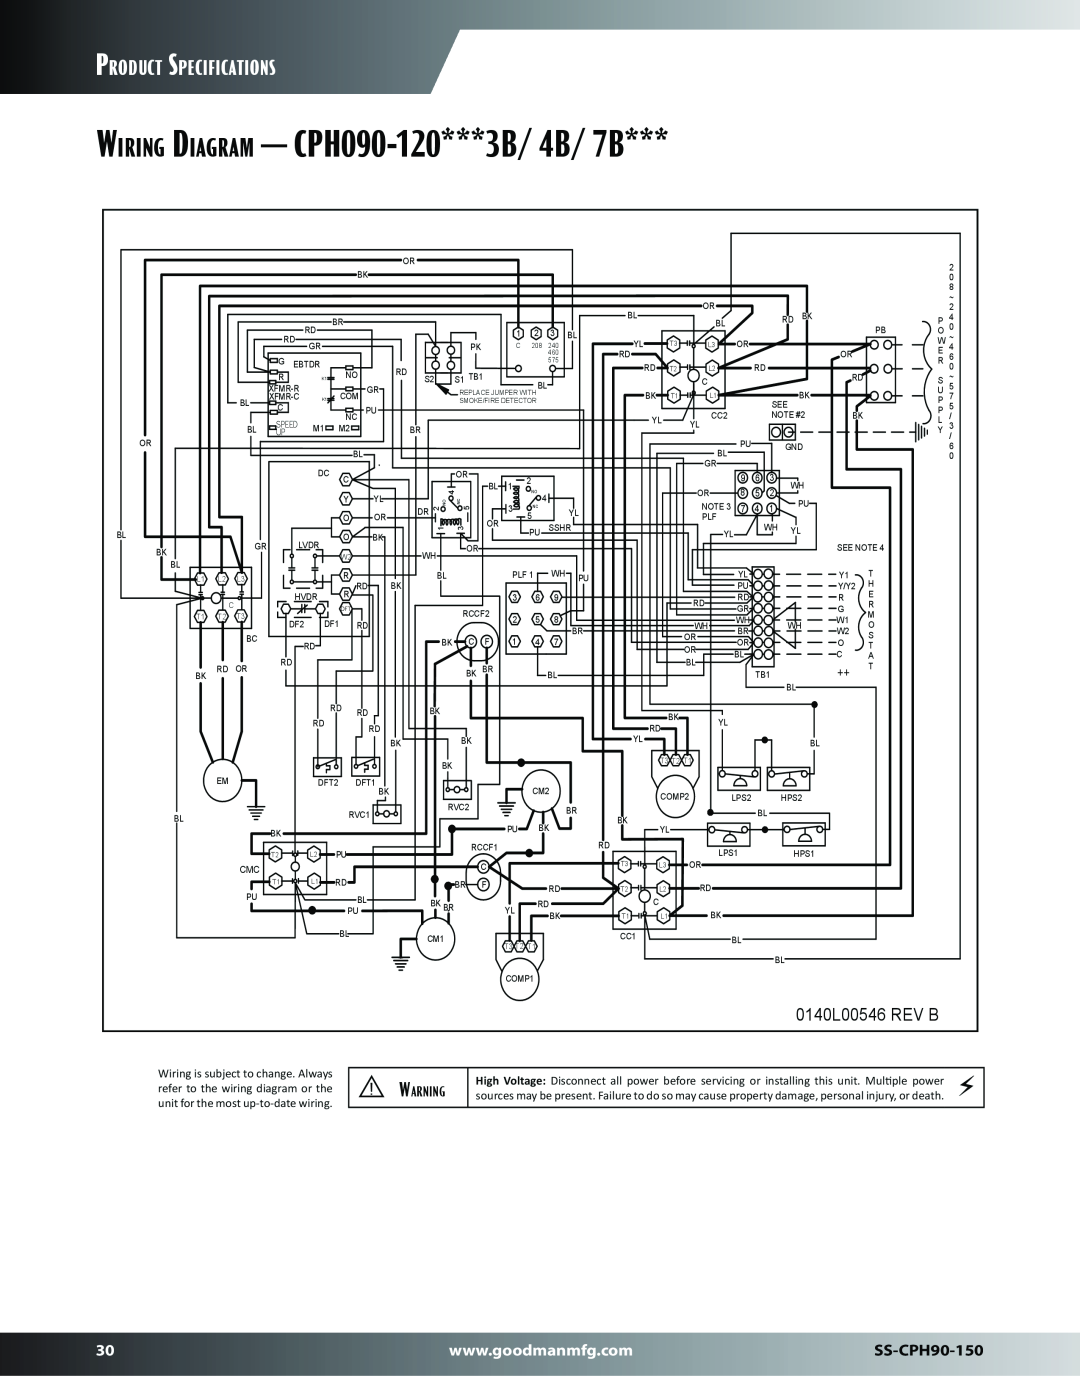 Goodman Mfg SS-CPH90-150 dimensions Wiring Diagram - CPH090-120***3B/4B/ 7B, Product Specifications, 0140L00546 REV B 